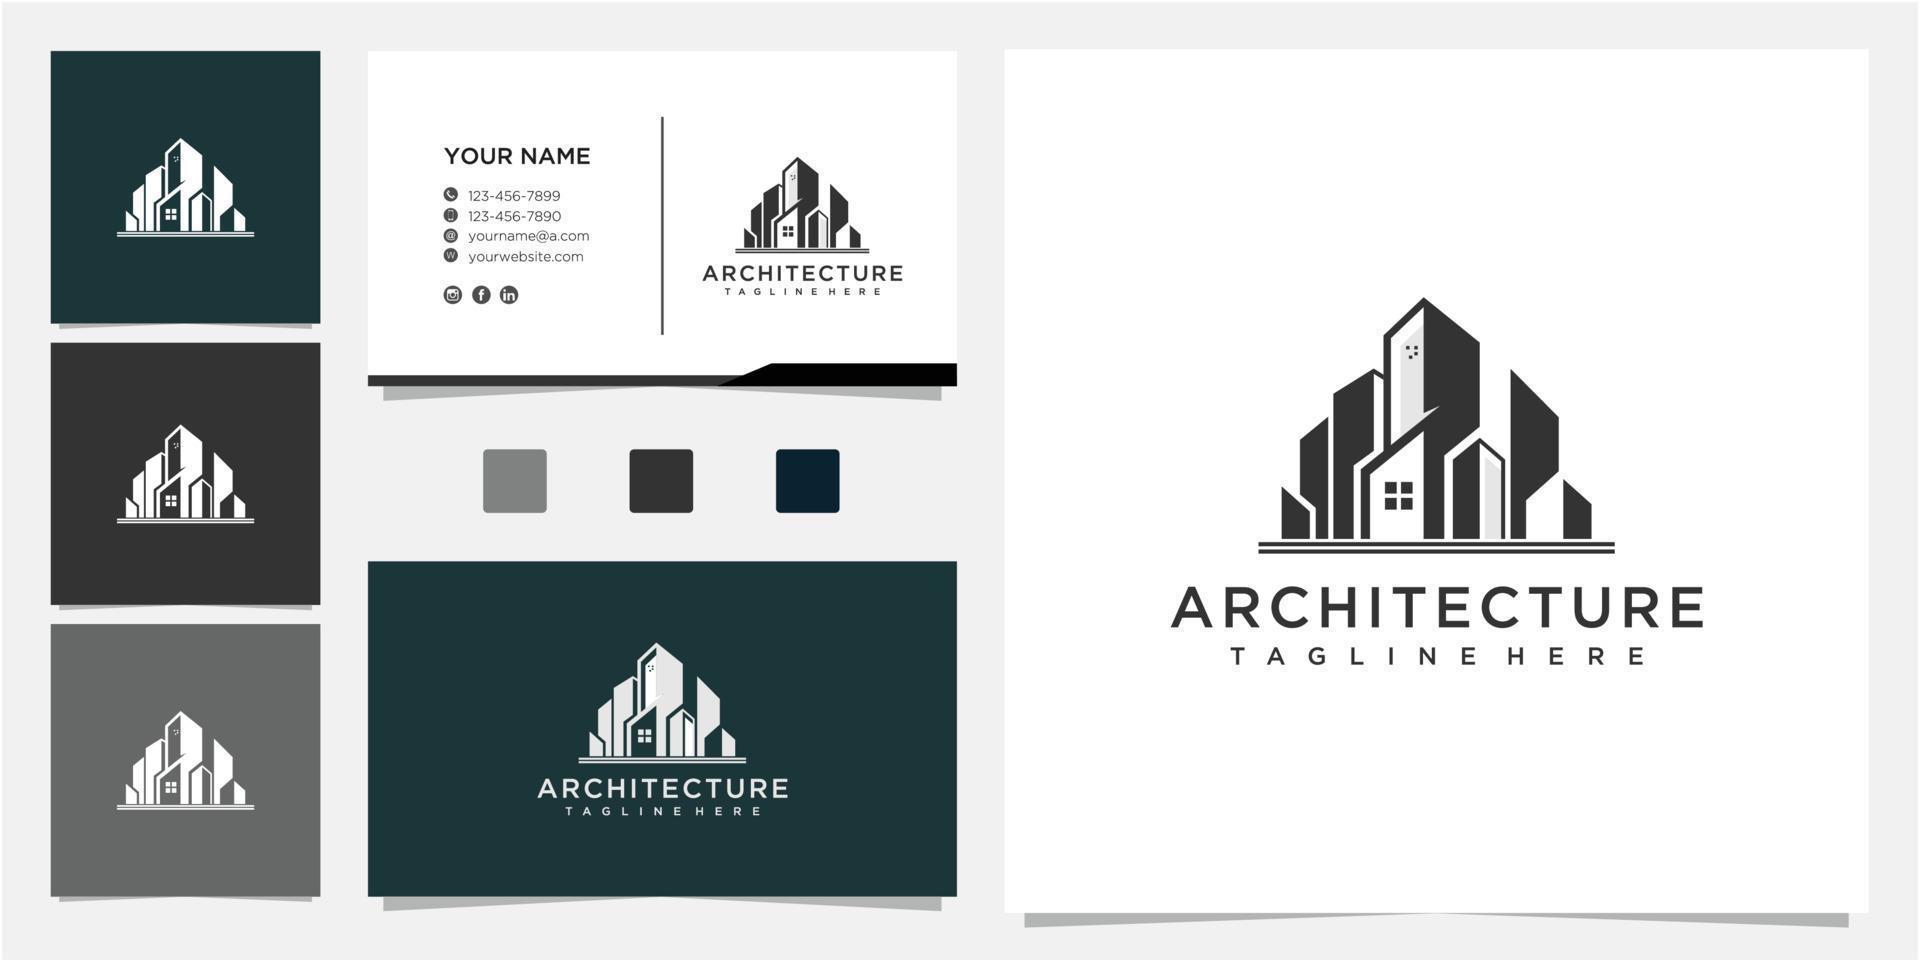 enkel modern byggnadsarkitektur logotypdesign med linjekonst skyskrapa grafik vektor